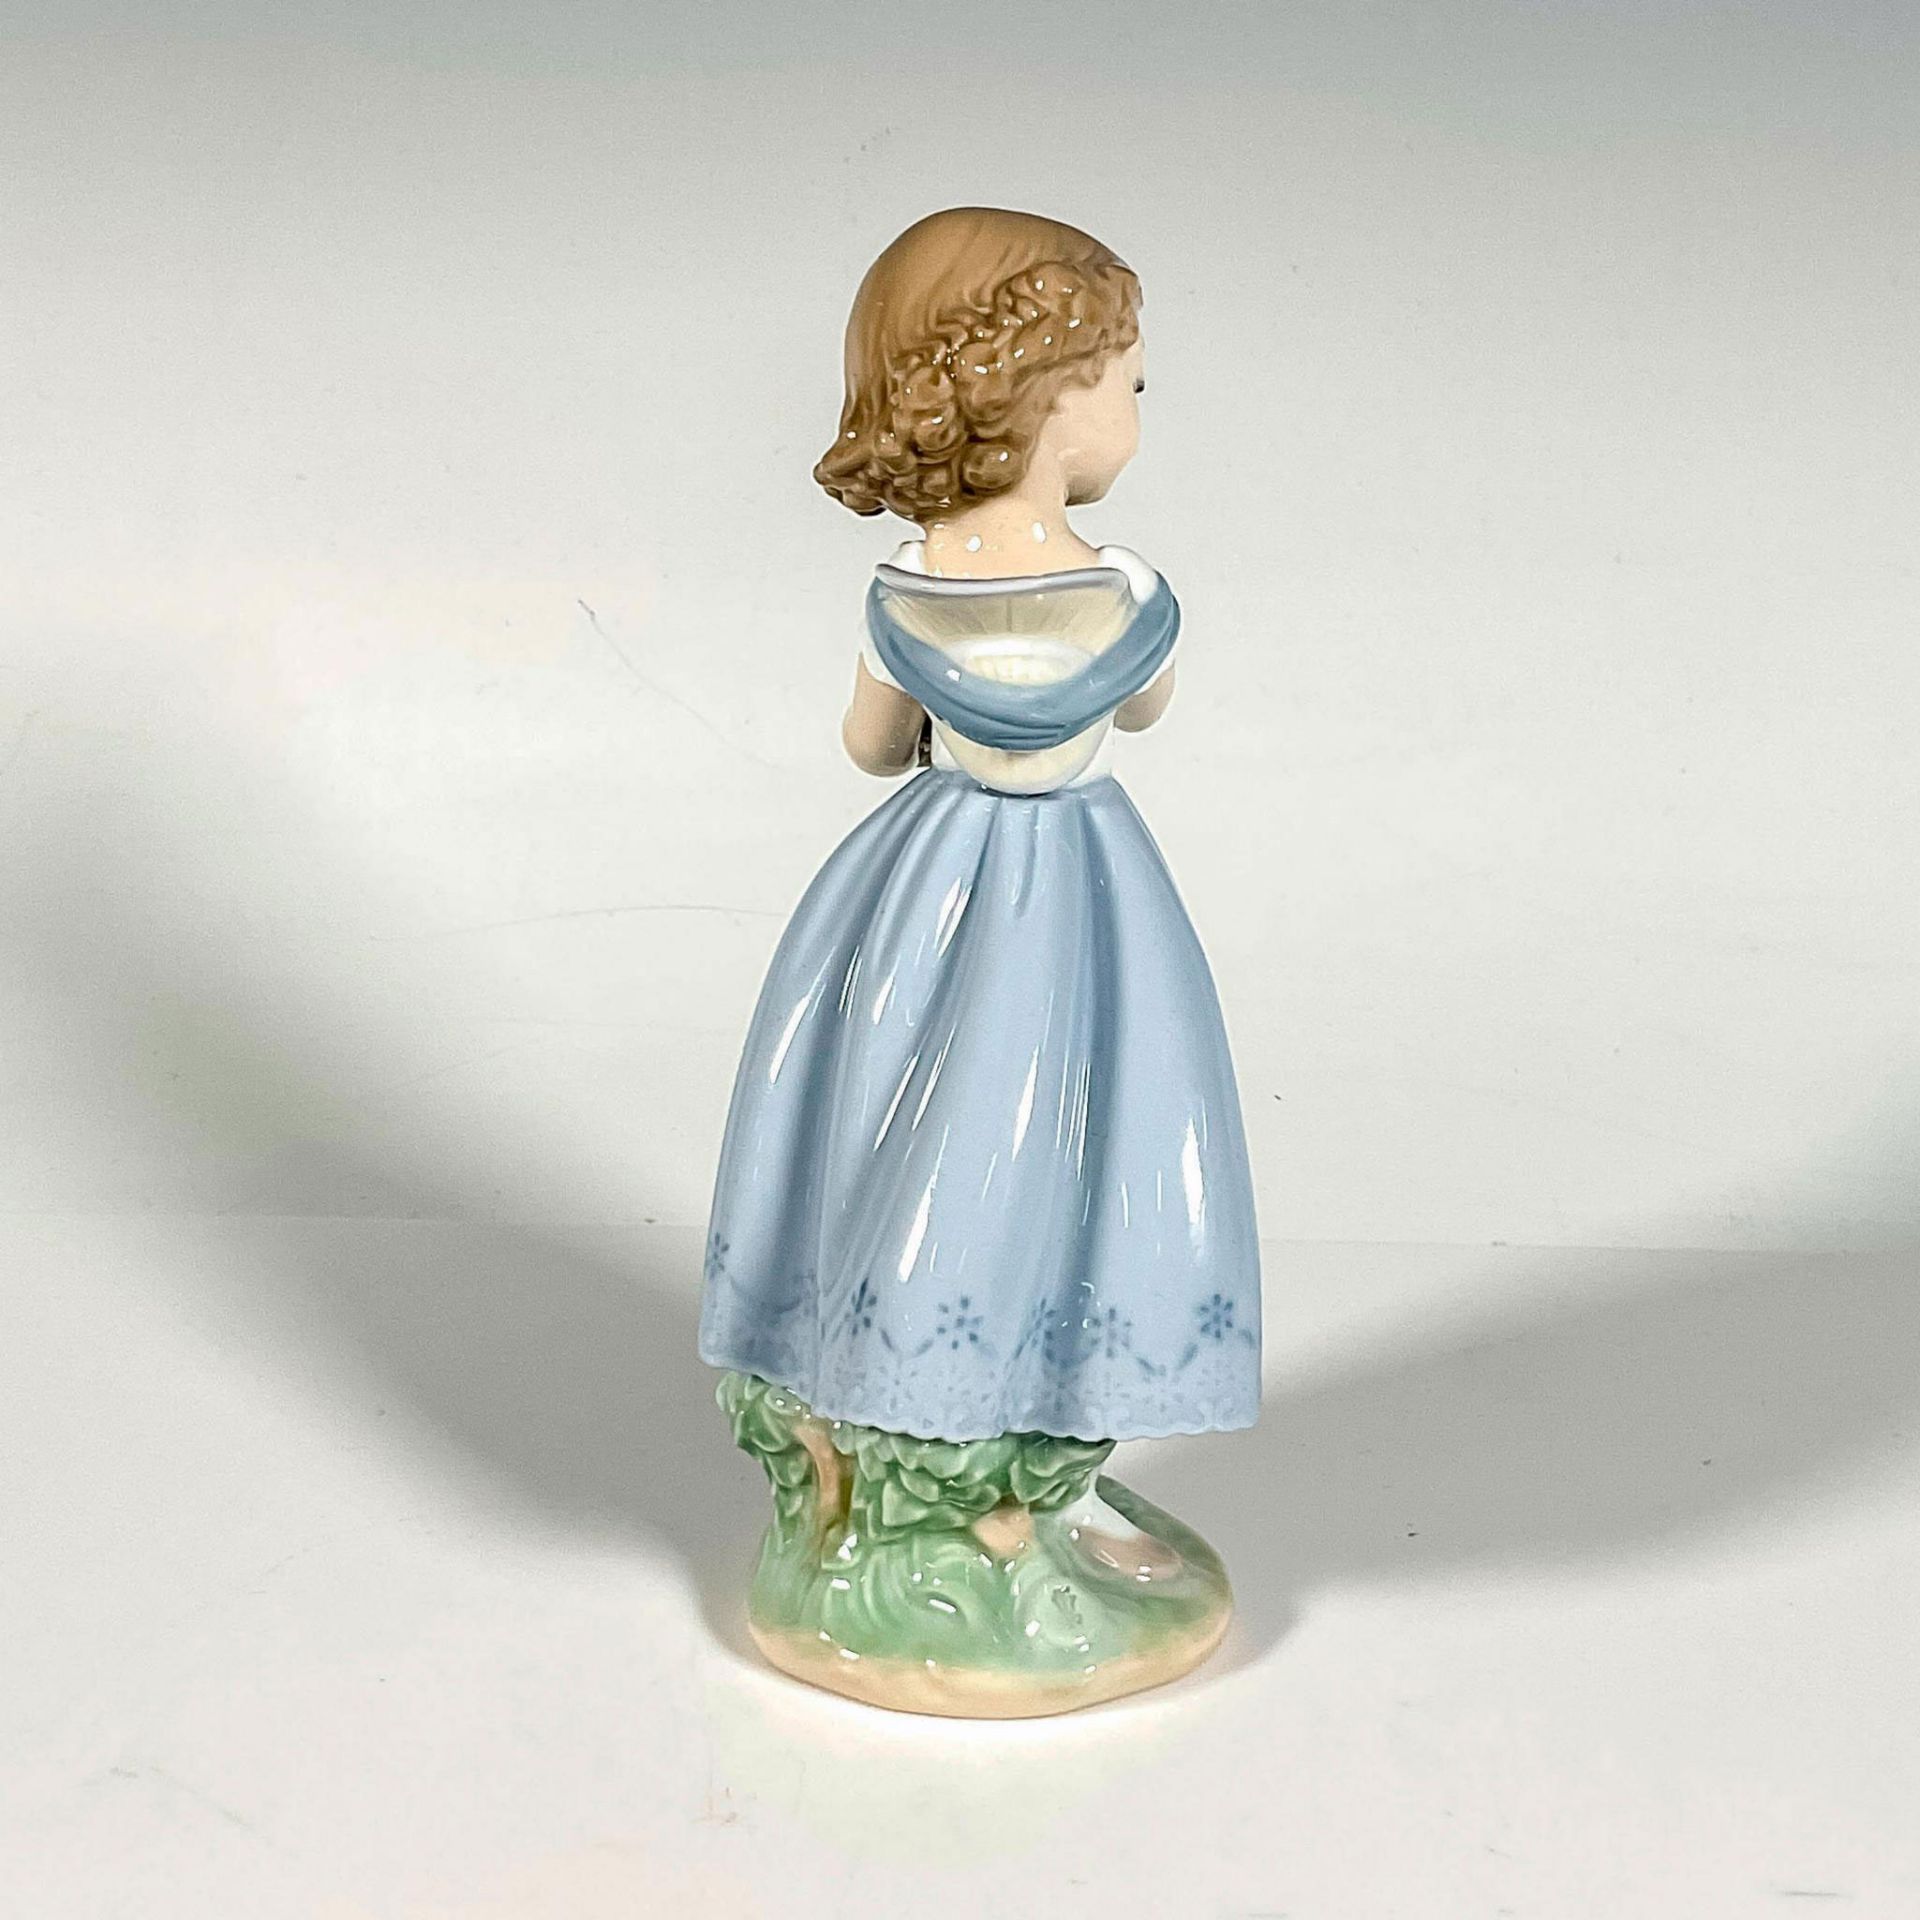 Adorable Innocence 1008247 - Lladro Porcelain Figurine - Image 2 of 4